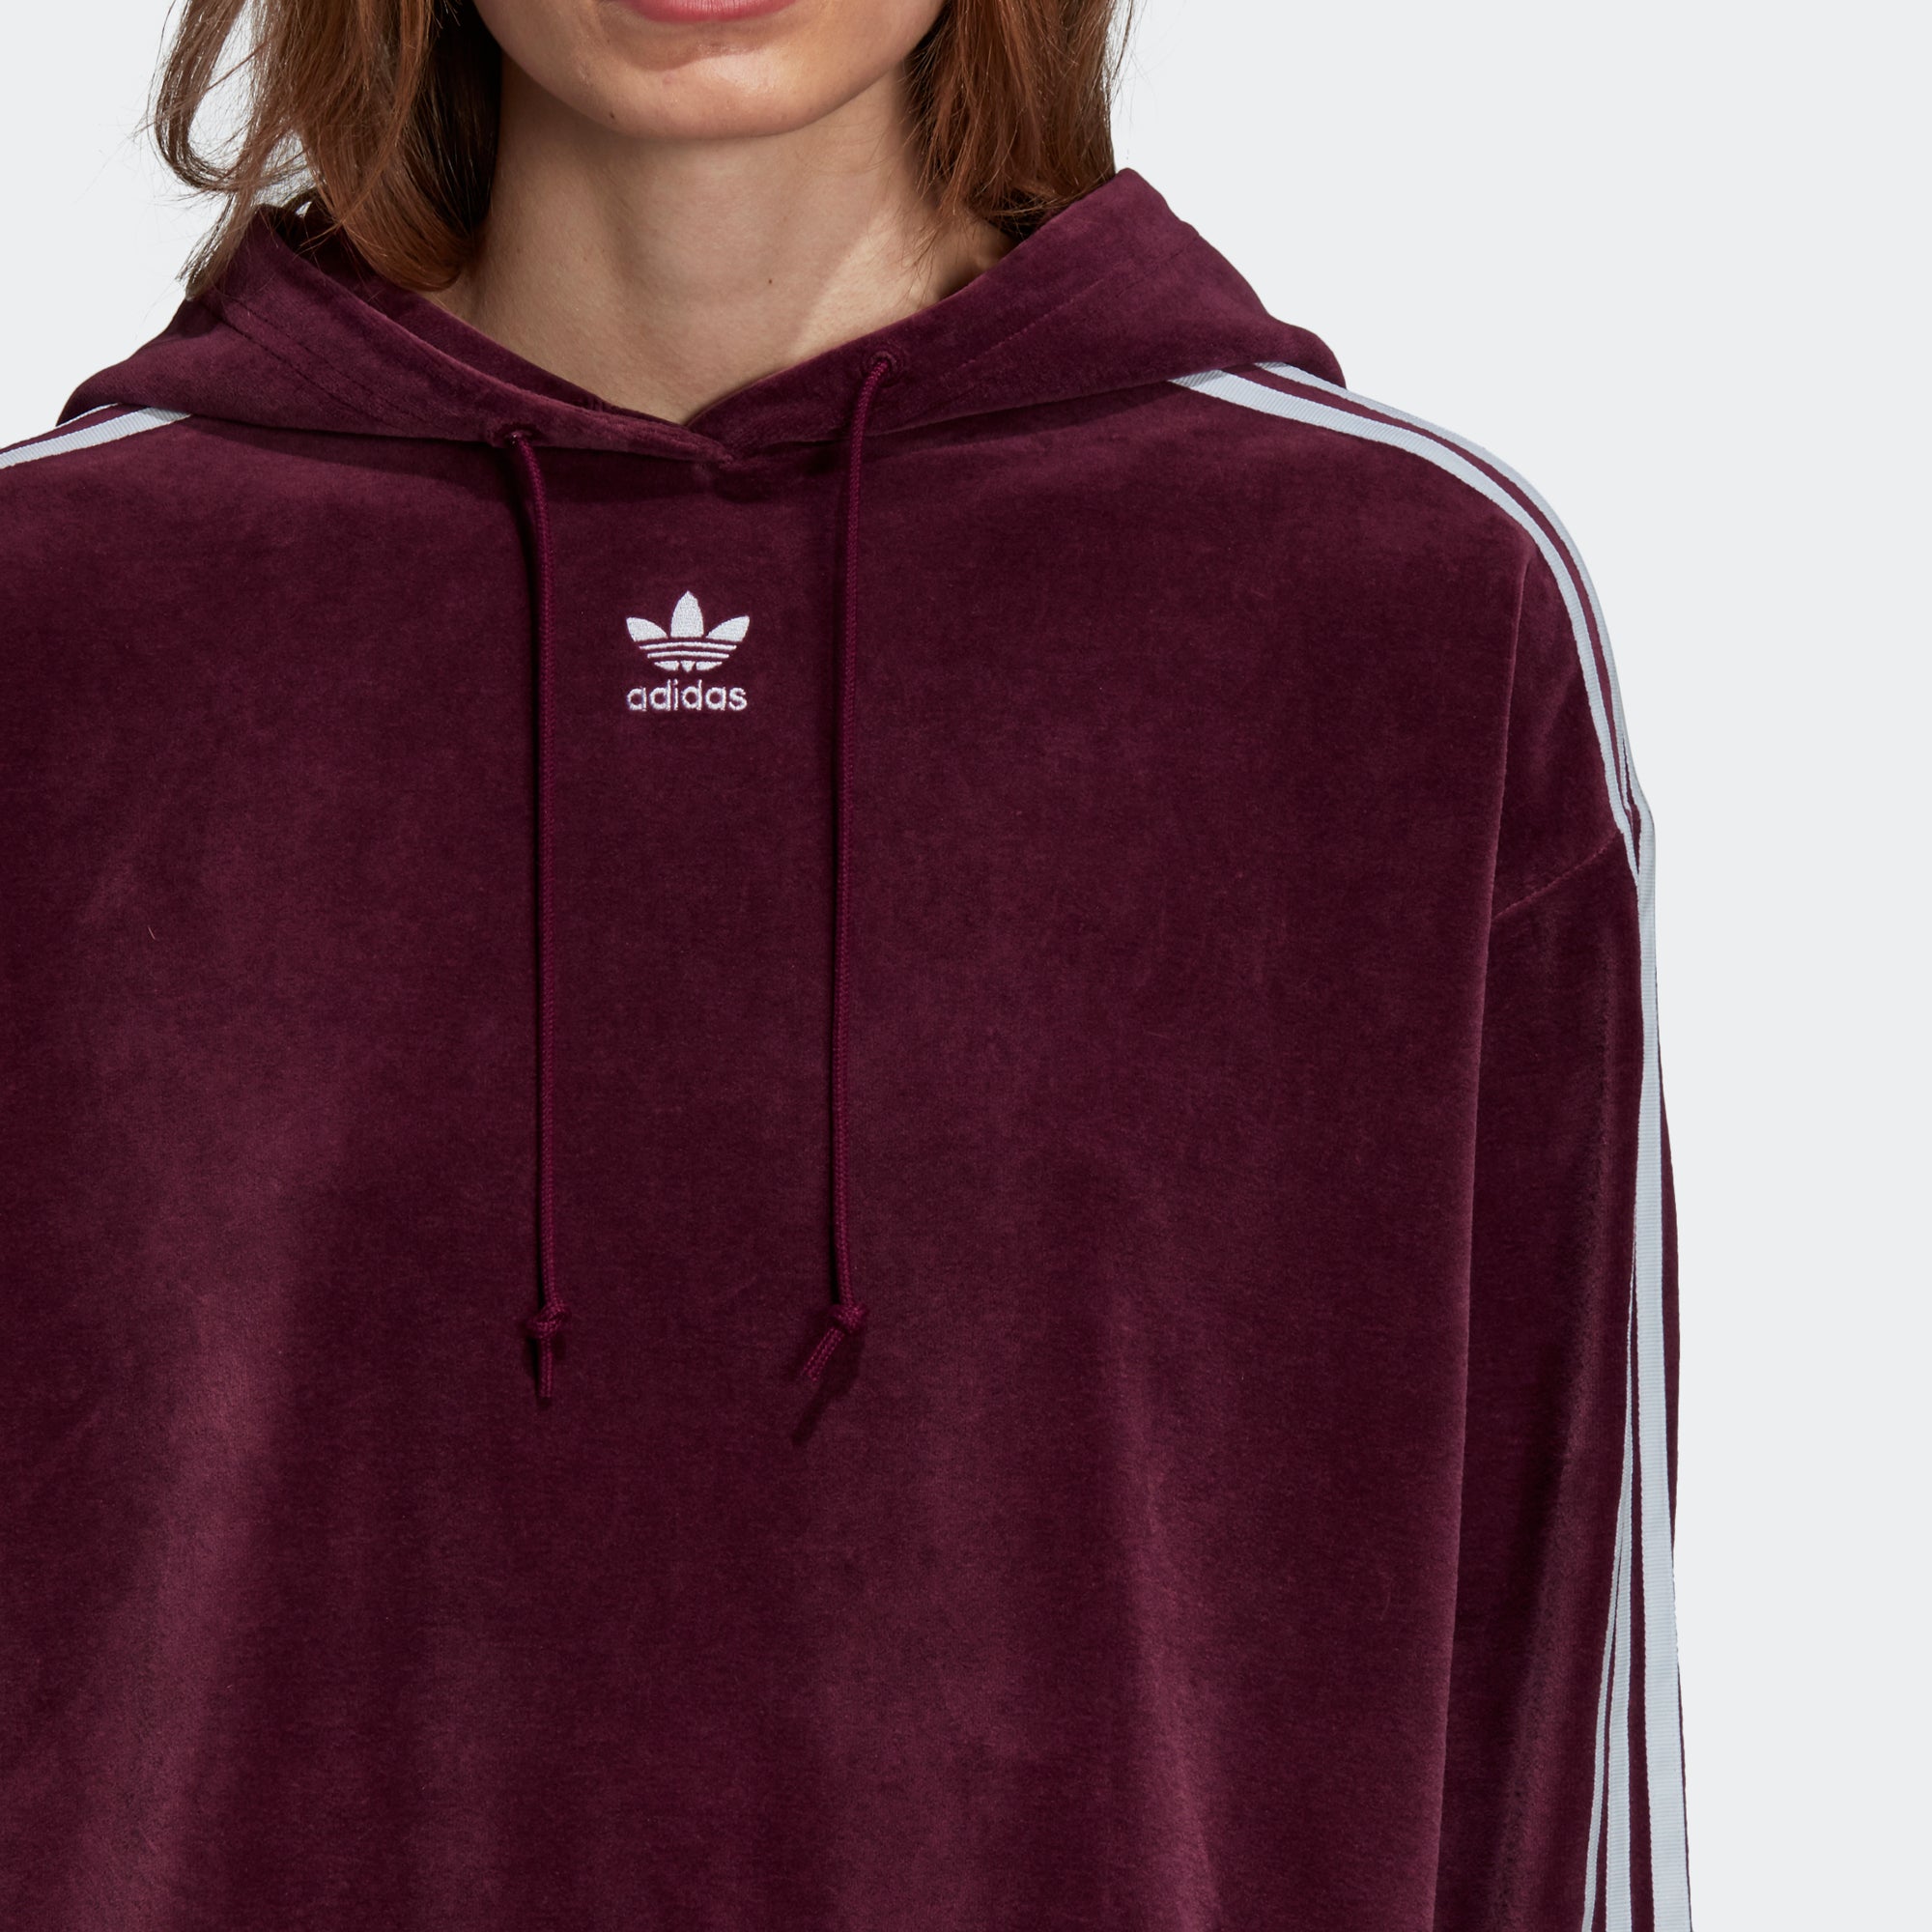 adidas originals hoodie burgundy